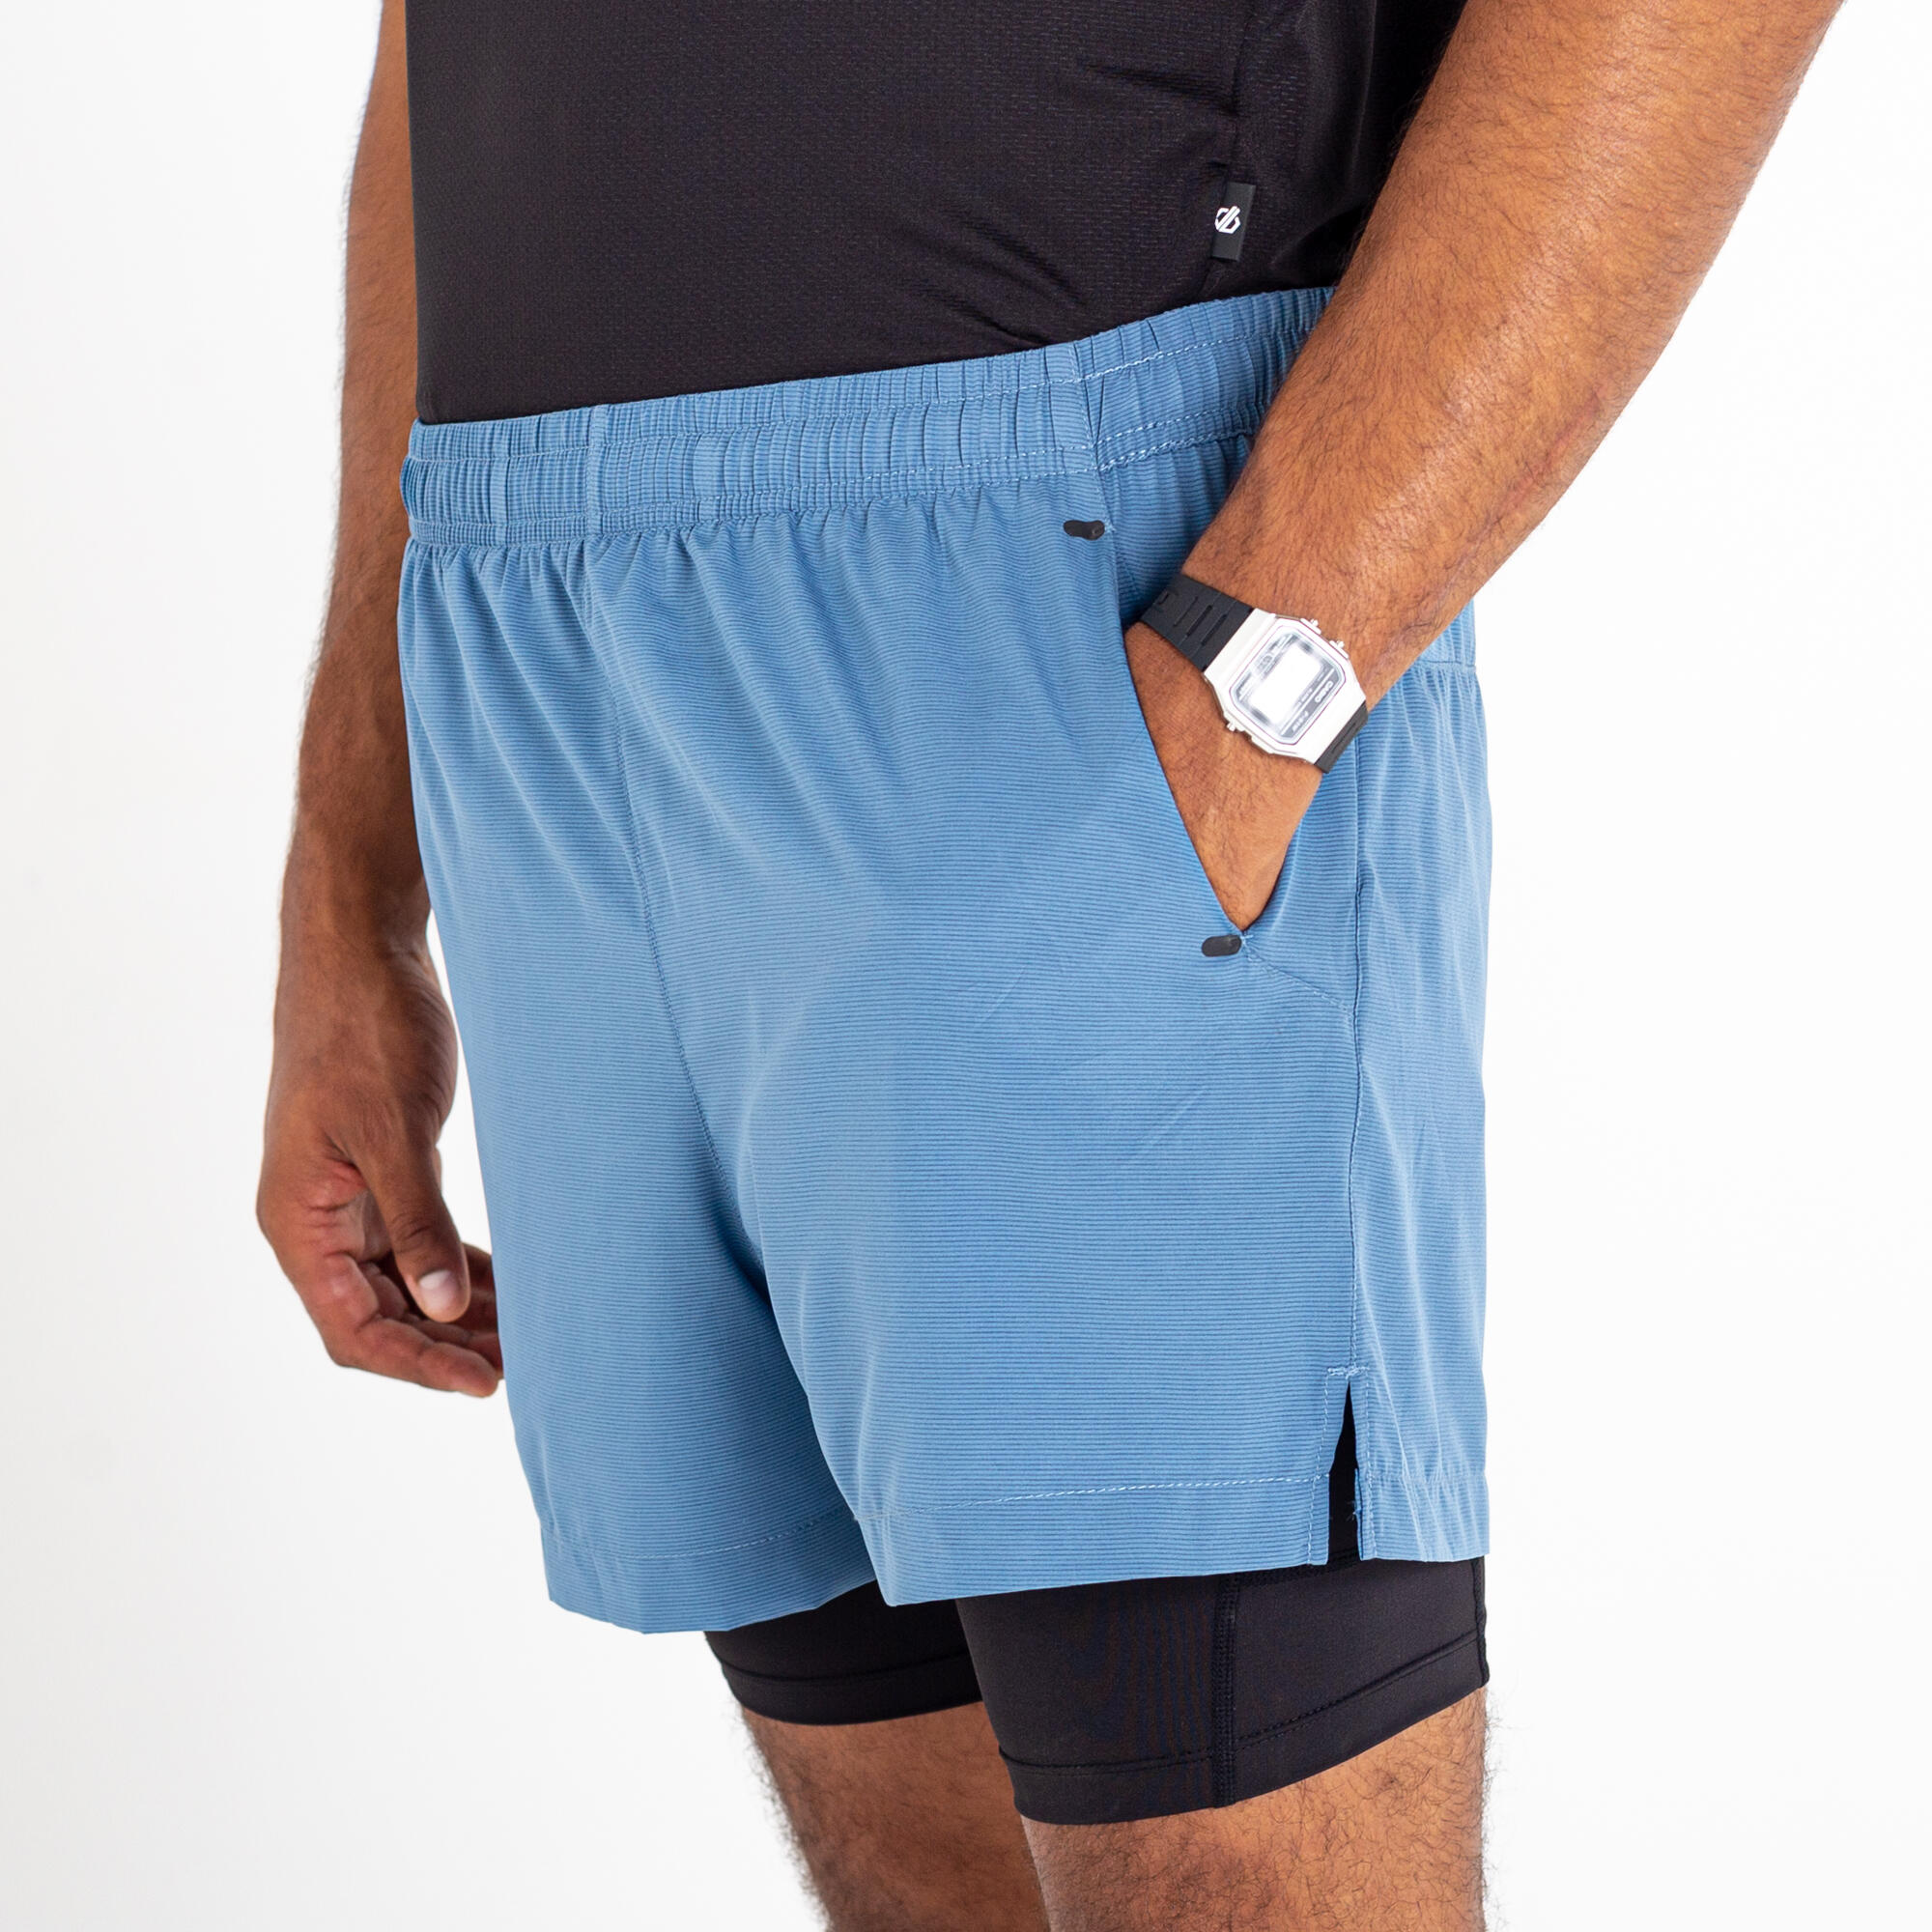 Recreate II Men's Fitness Shorts - Stellar Blue 5/5